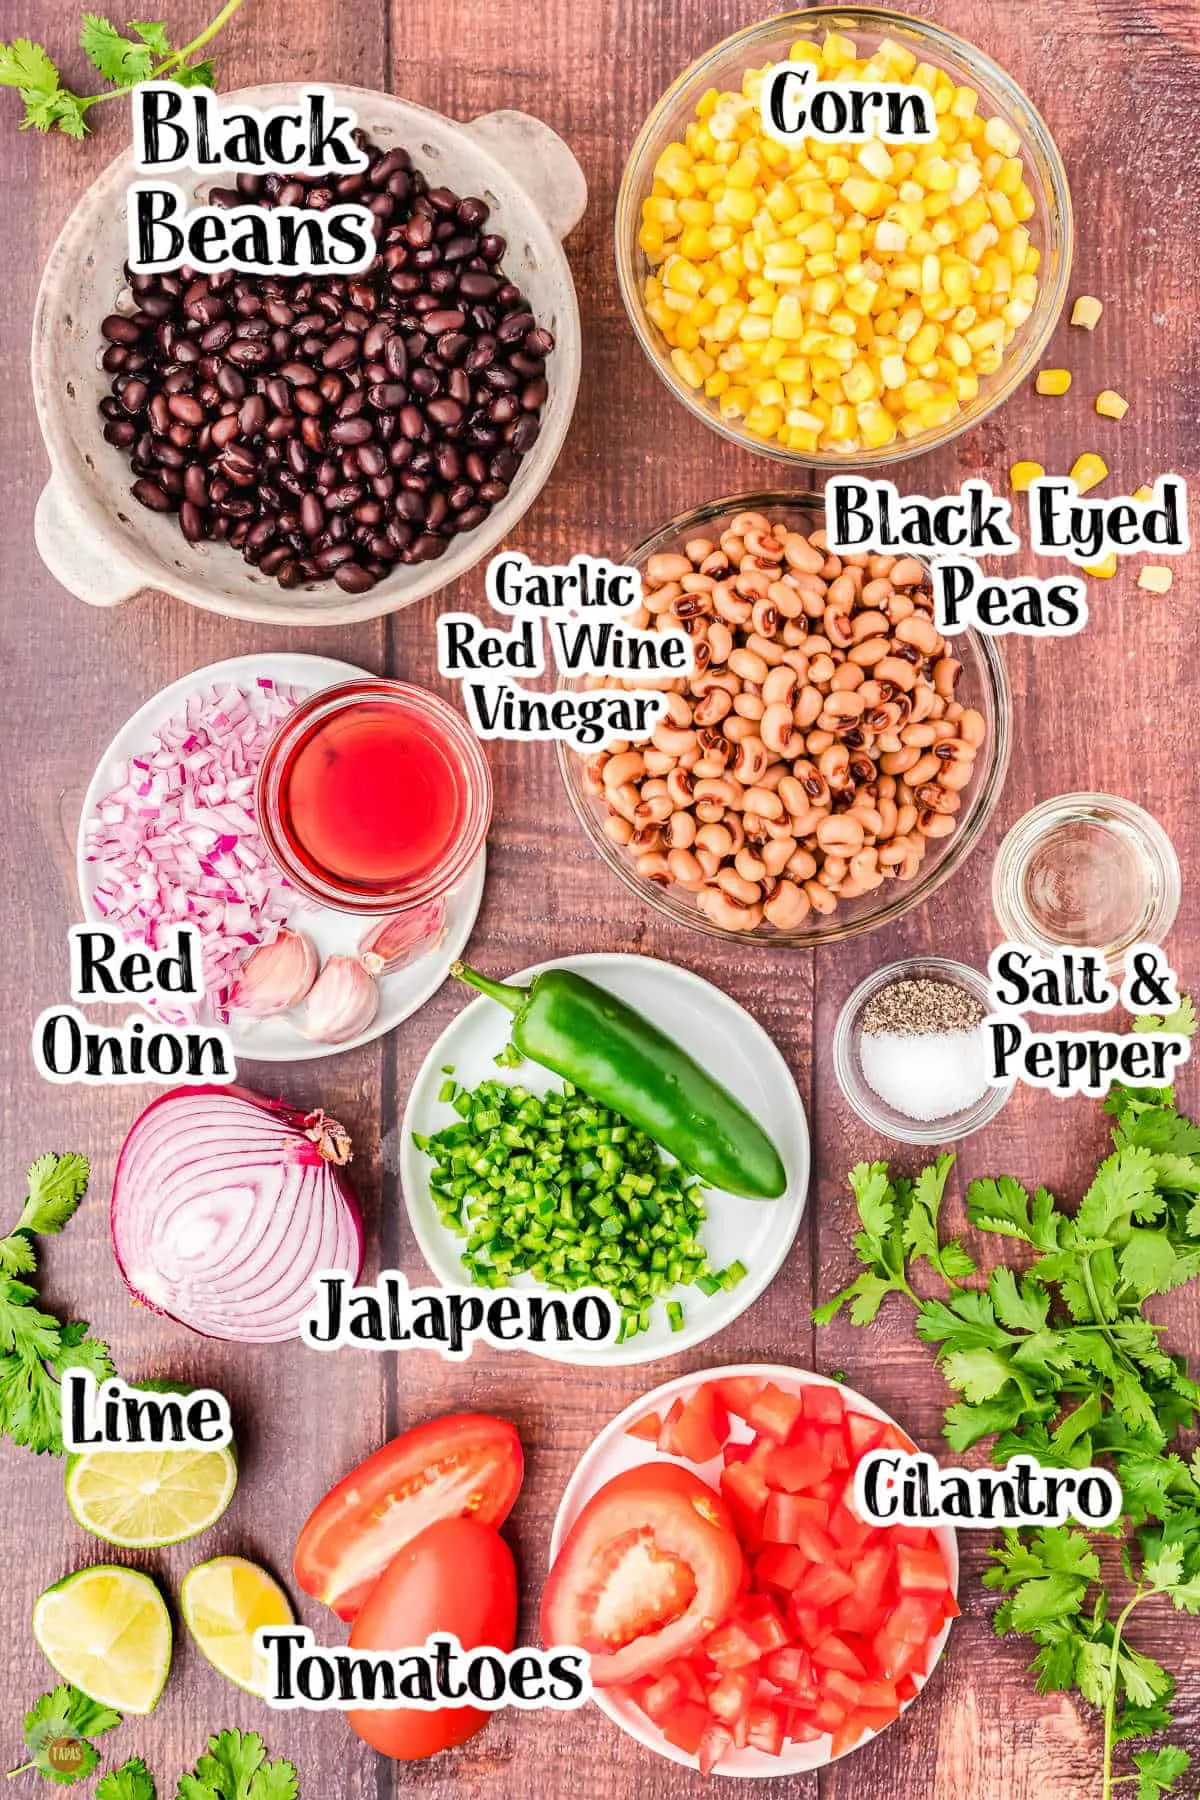 simple ingredients like corn kernels and black beans in bowls